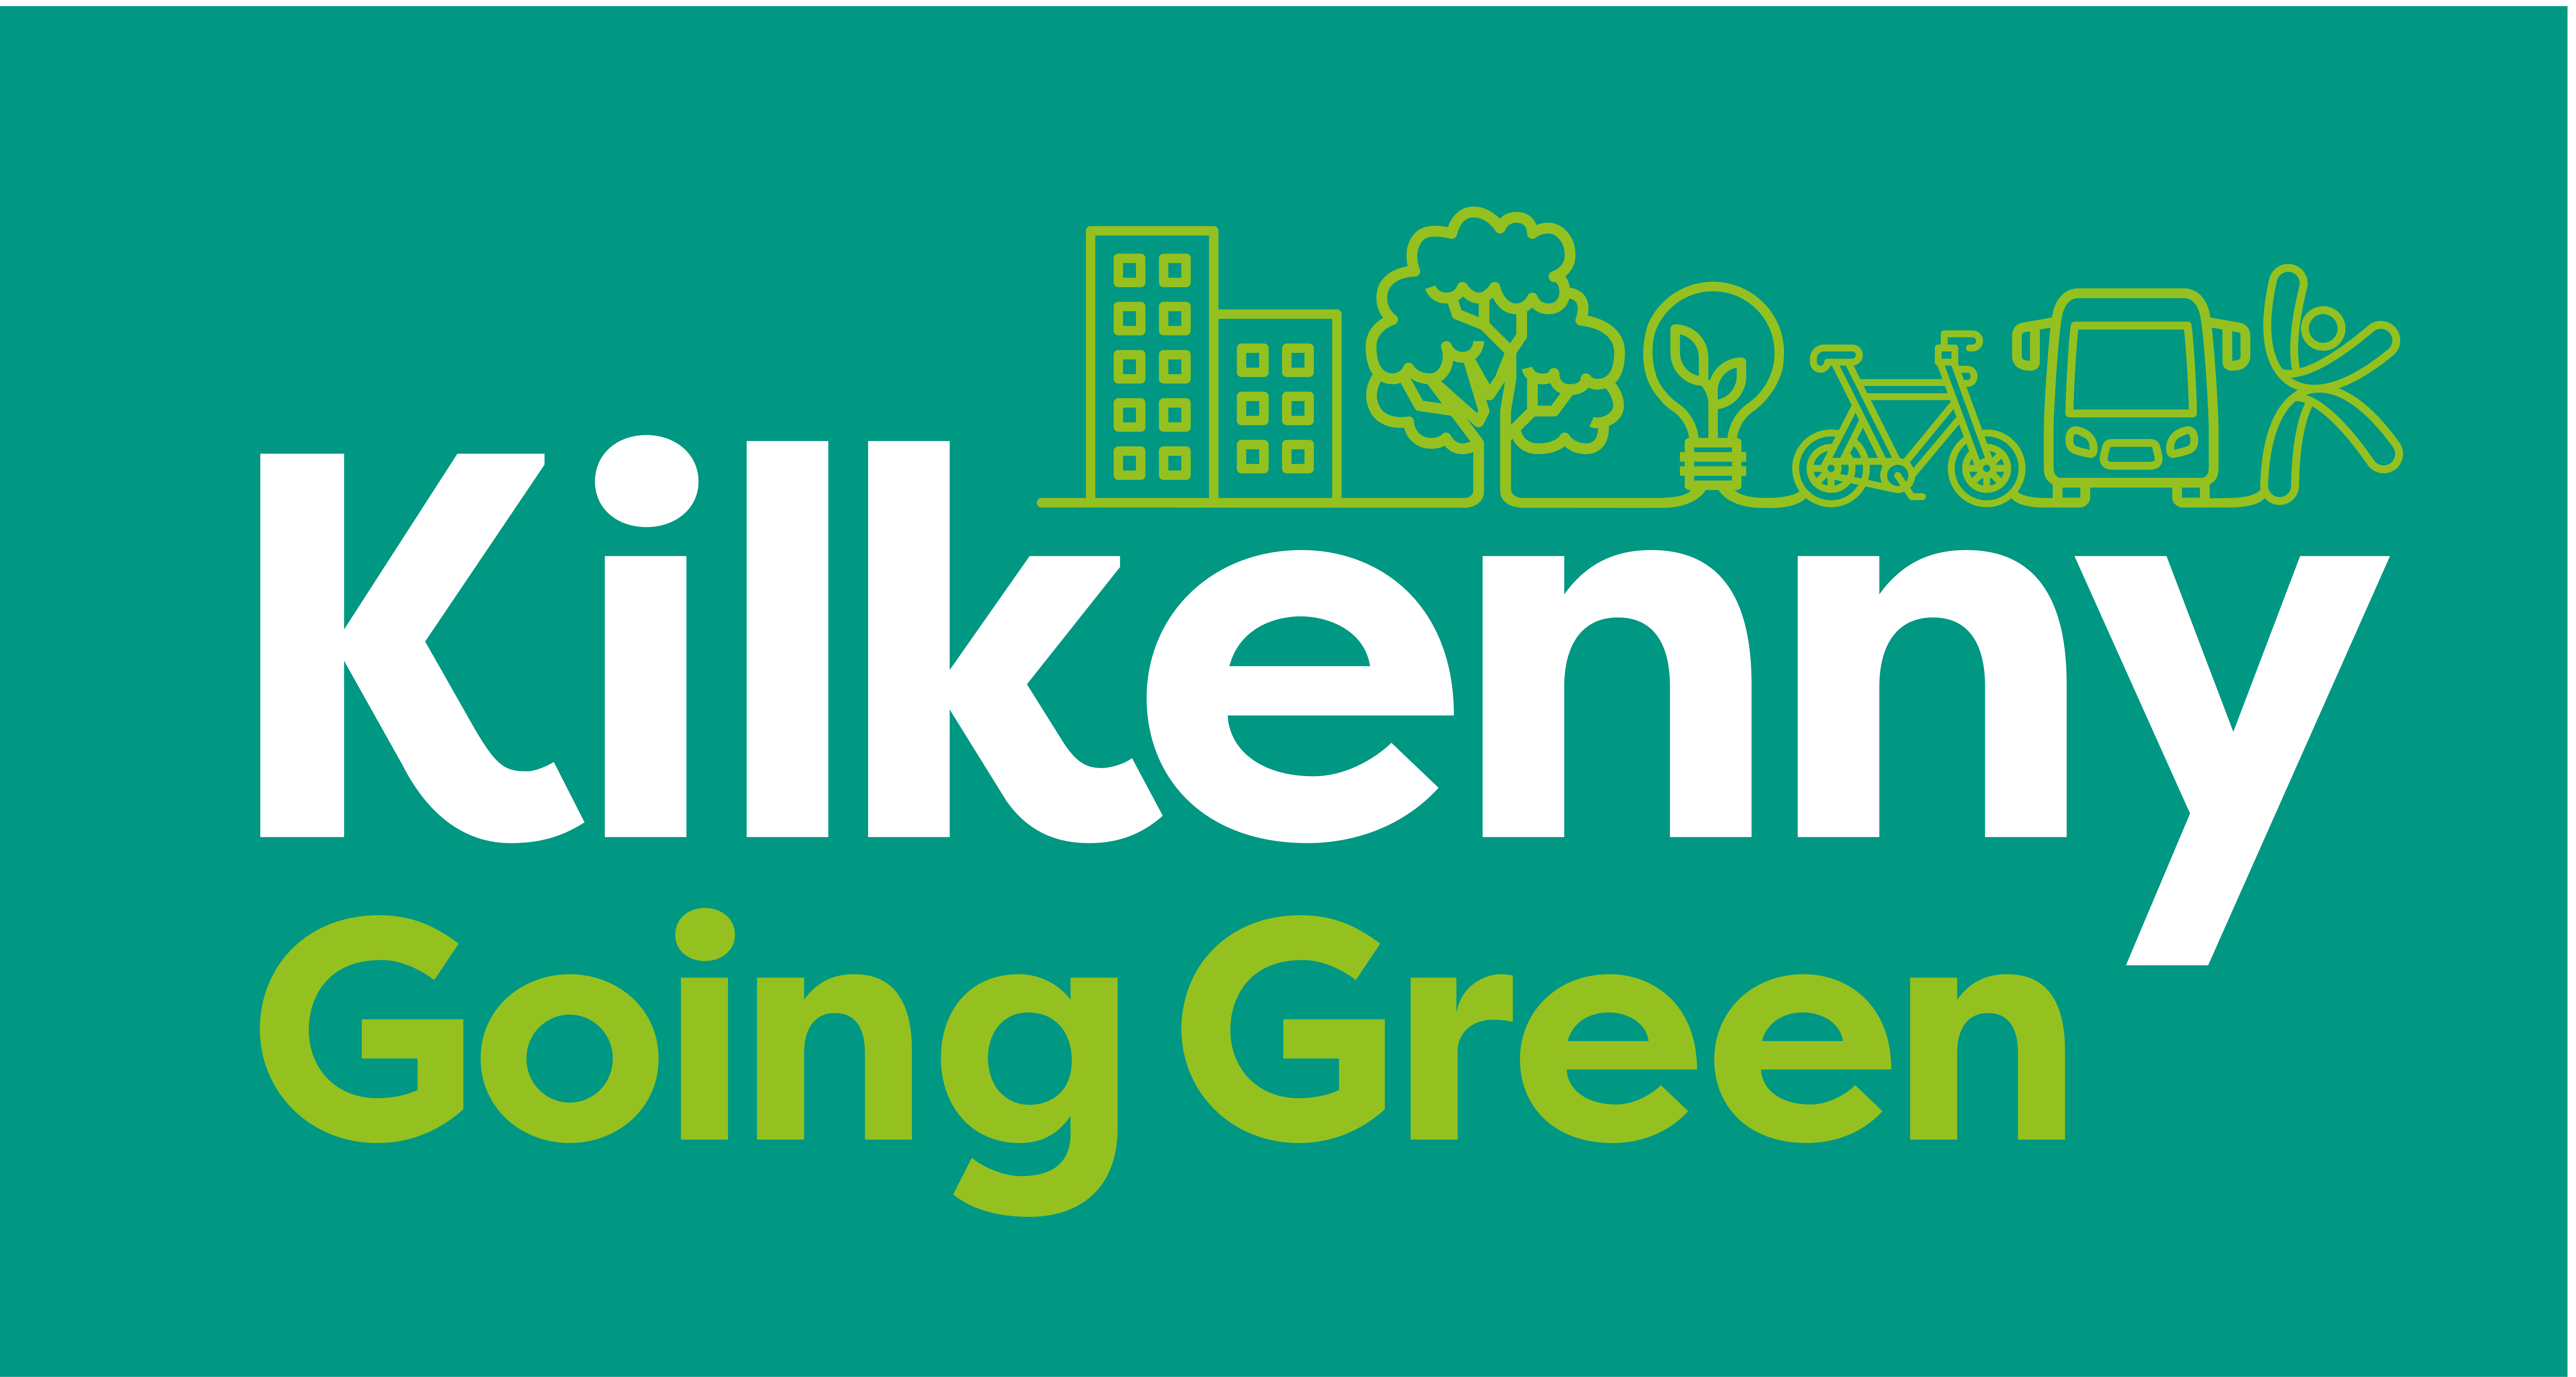 Kilkenny-Going-Green_marca-principal-color-invertido